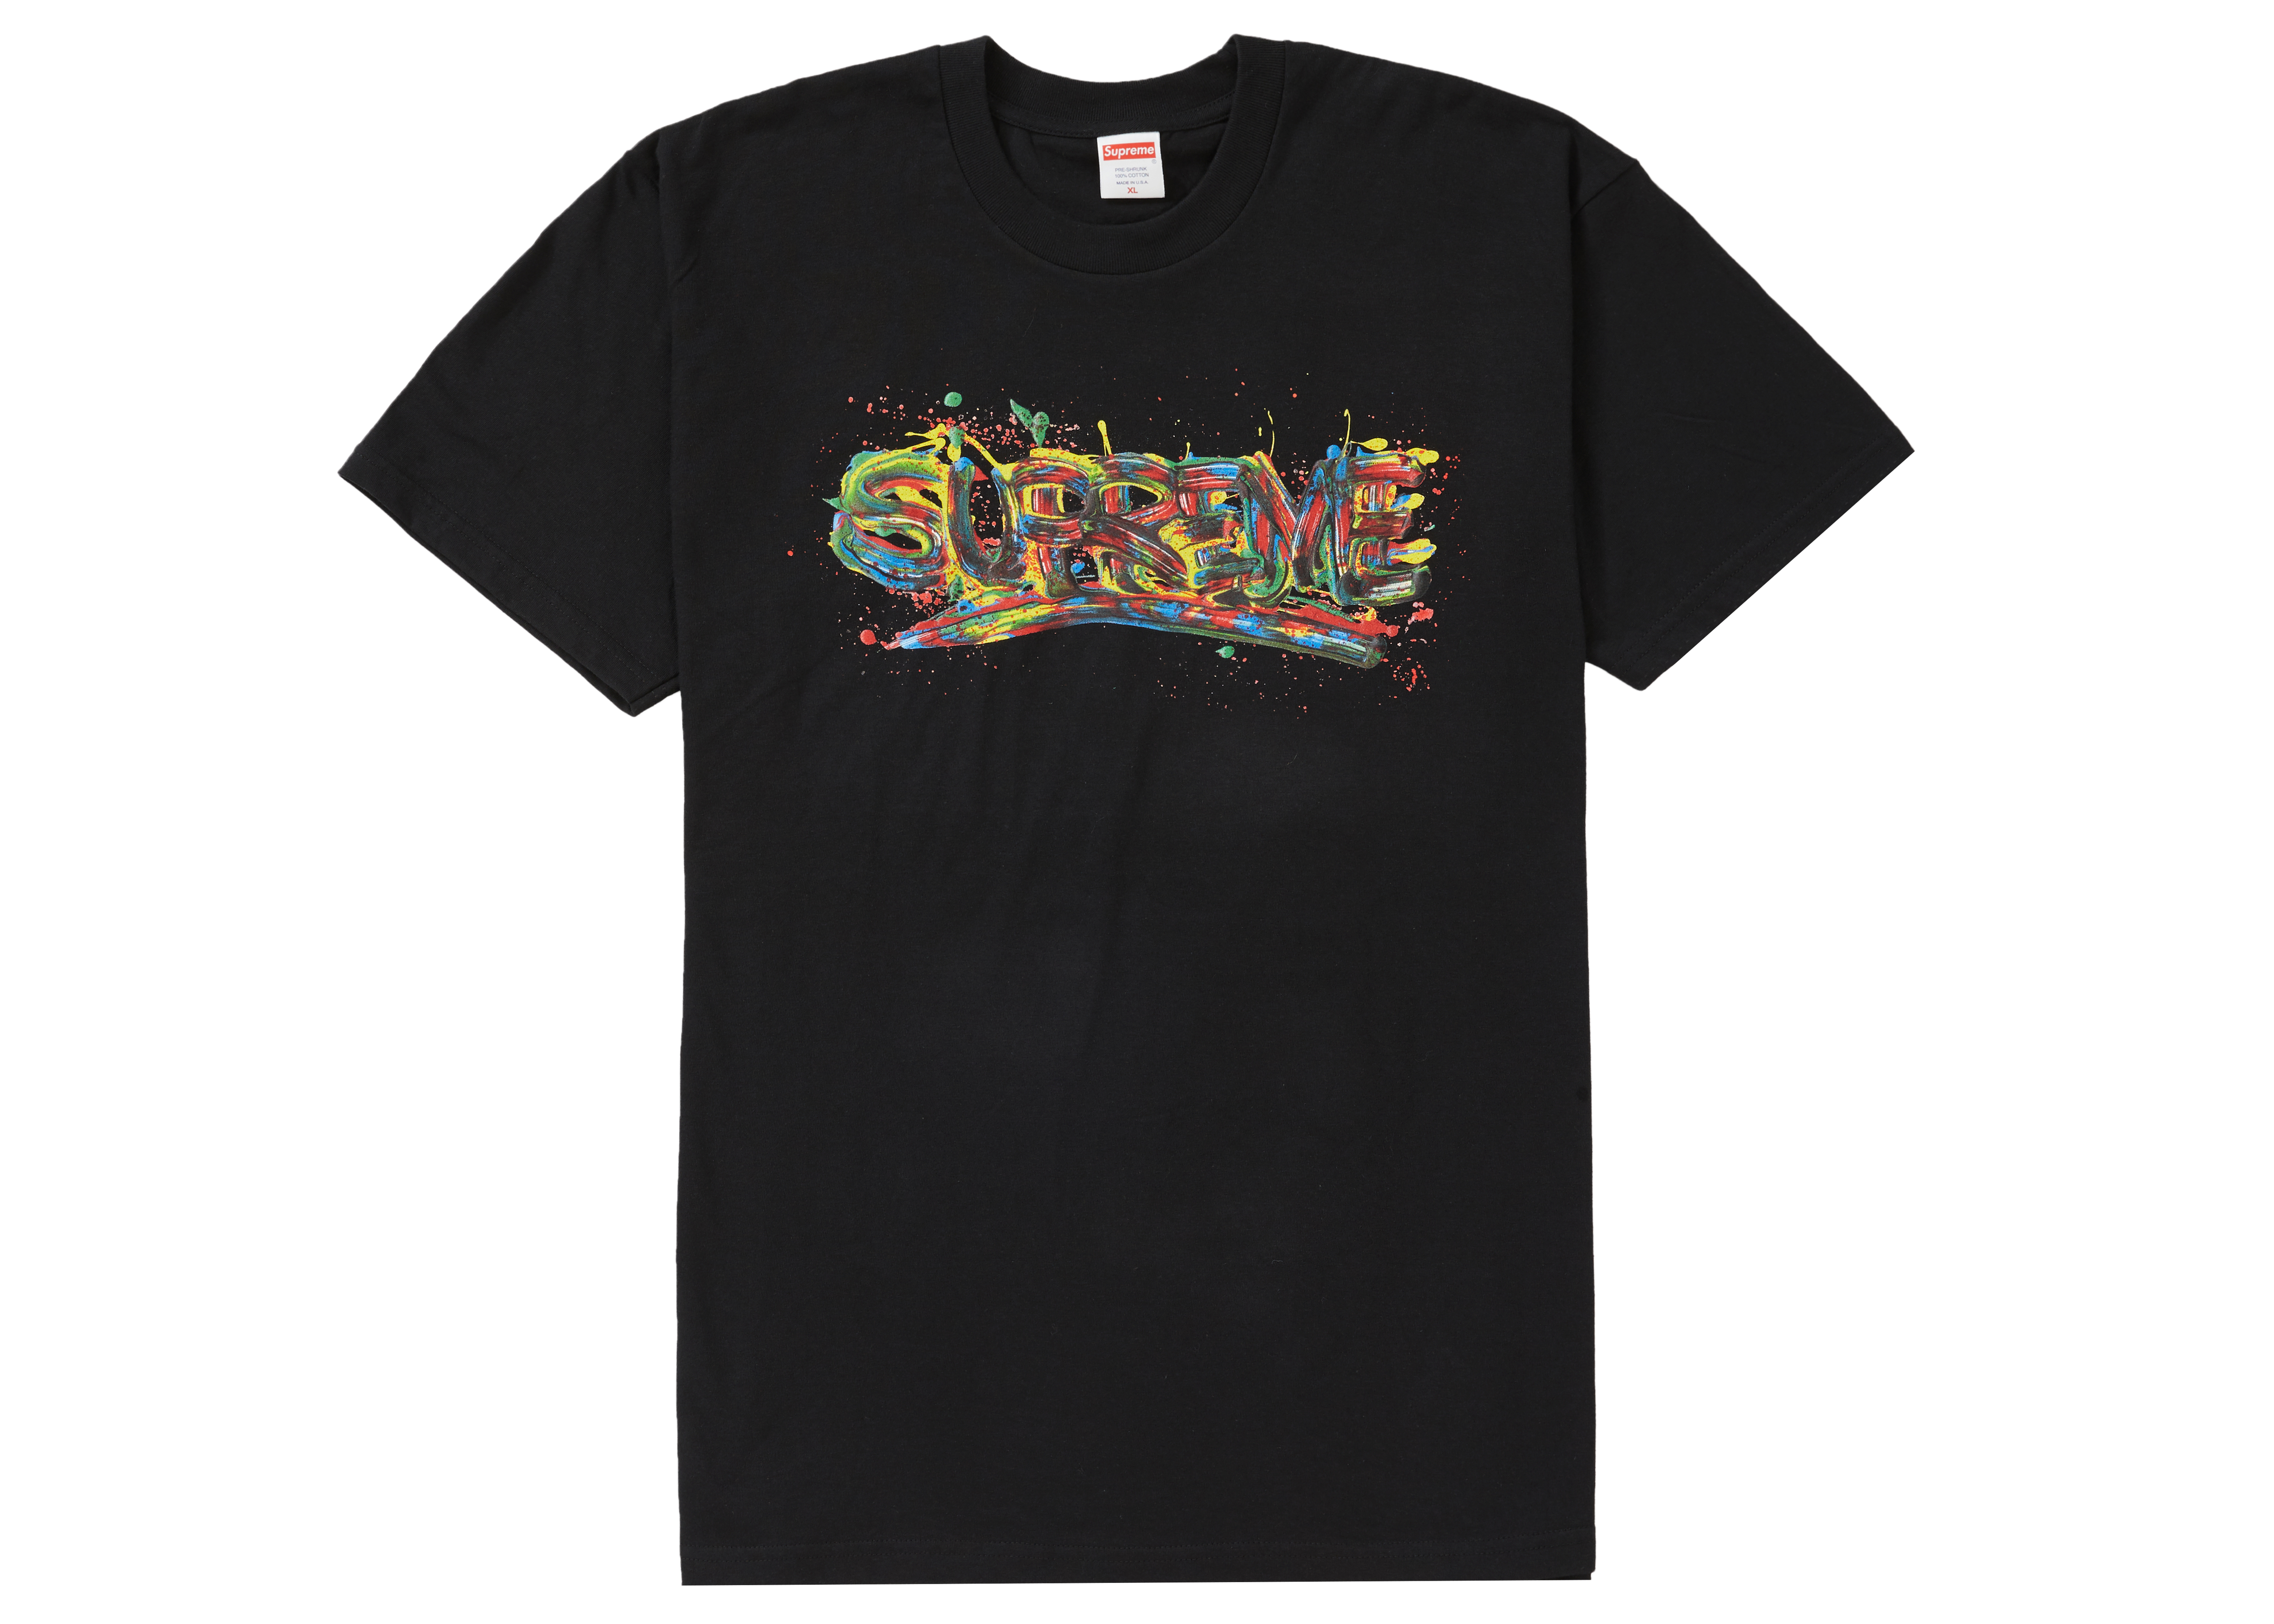 supreme painted logo shirts